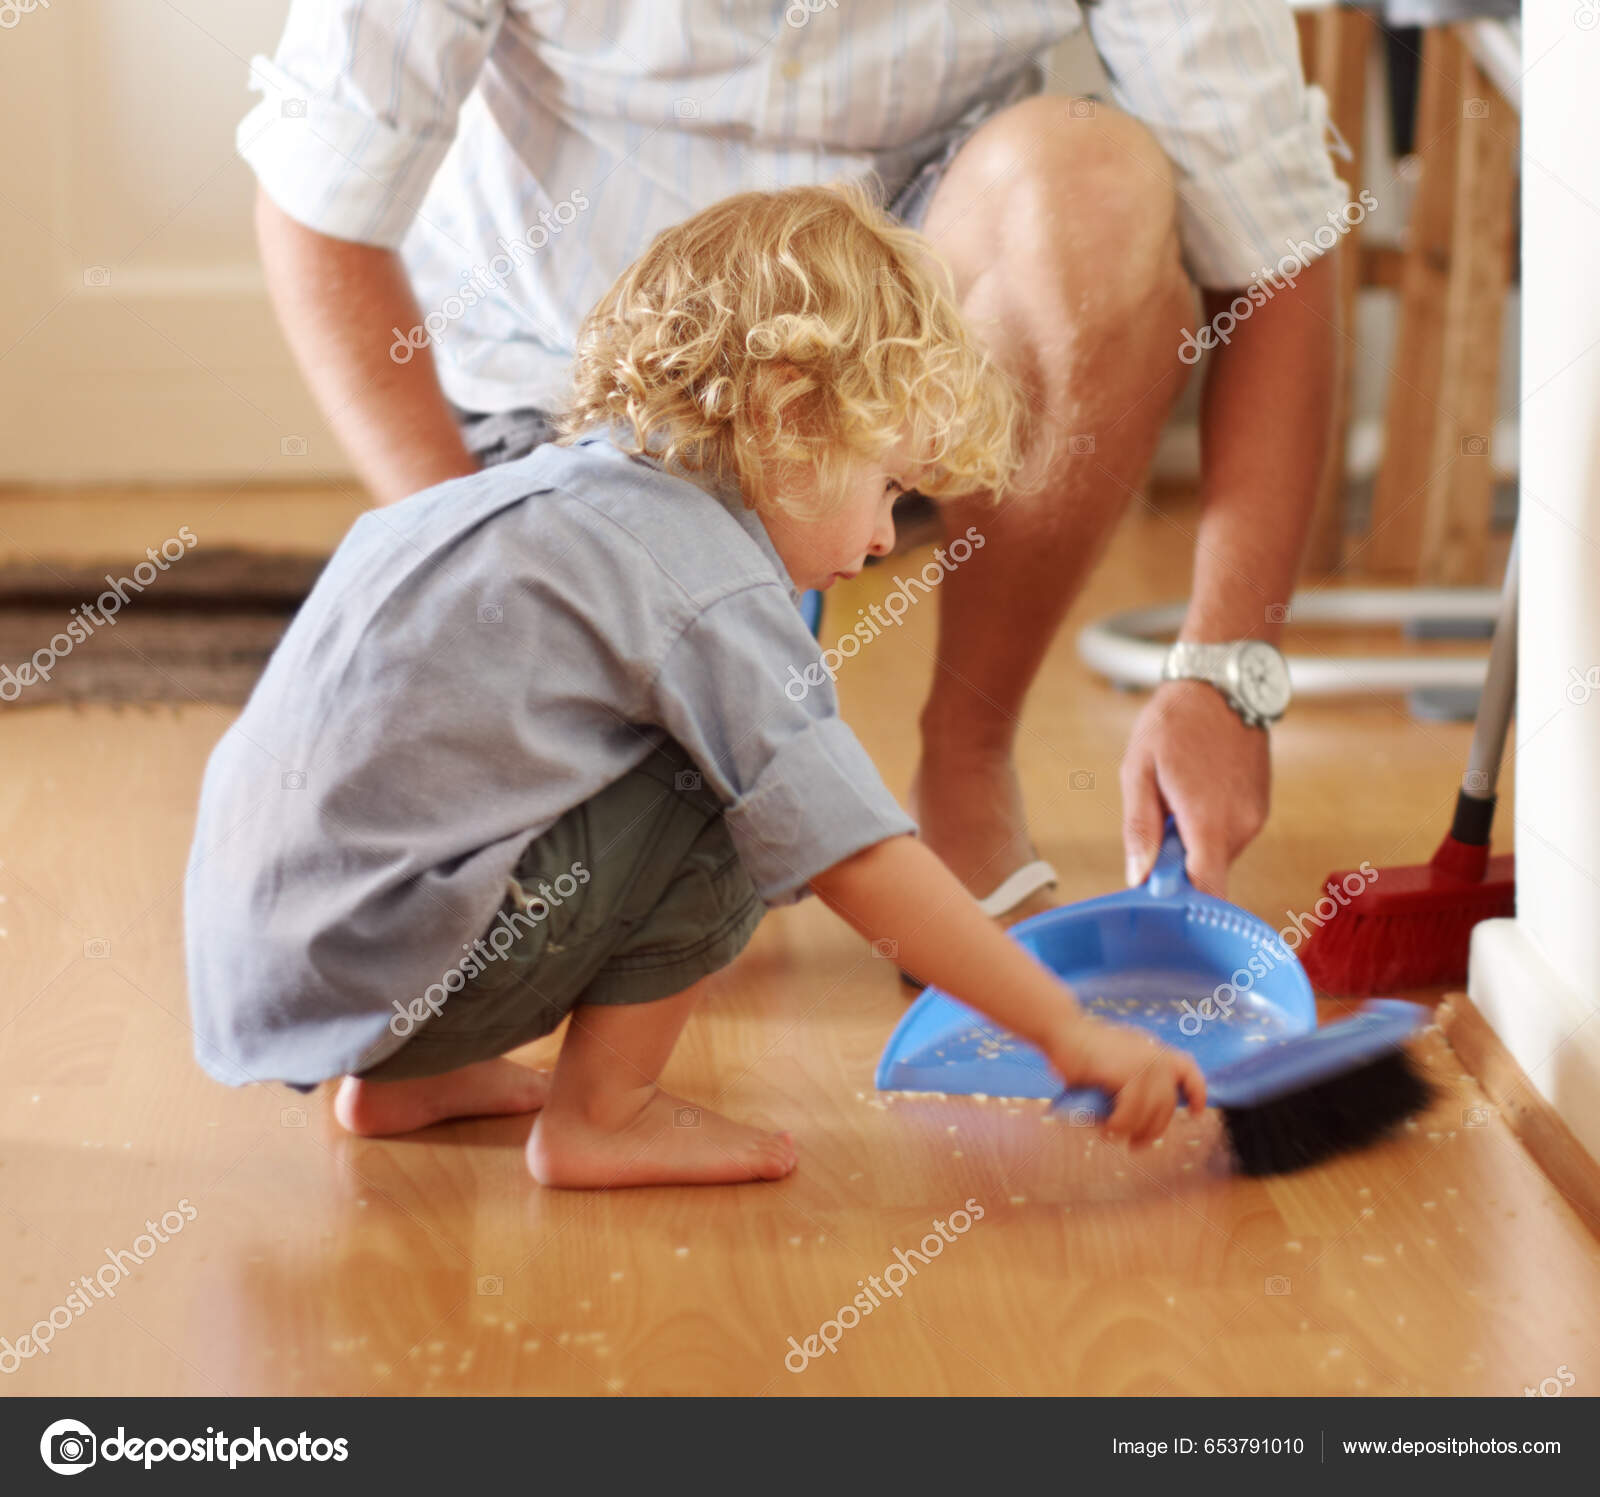 https://st5.depositphotos.com/62628780/65379/i/1600/depositphotos_653791010-stock-photo-father-boy-child-sweeping-mess.jpg